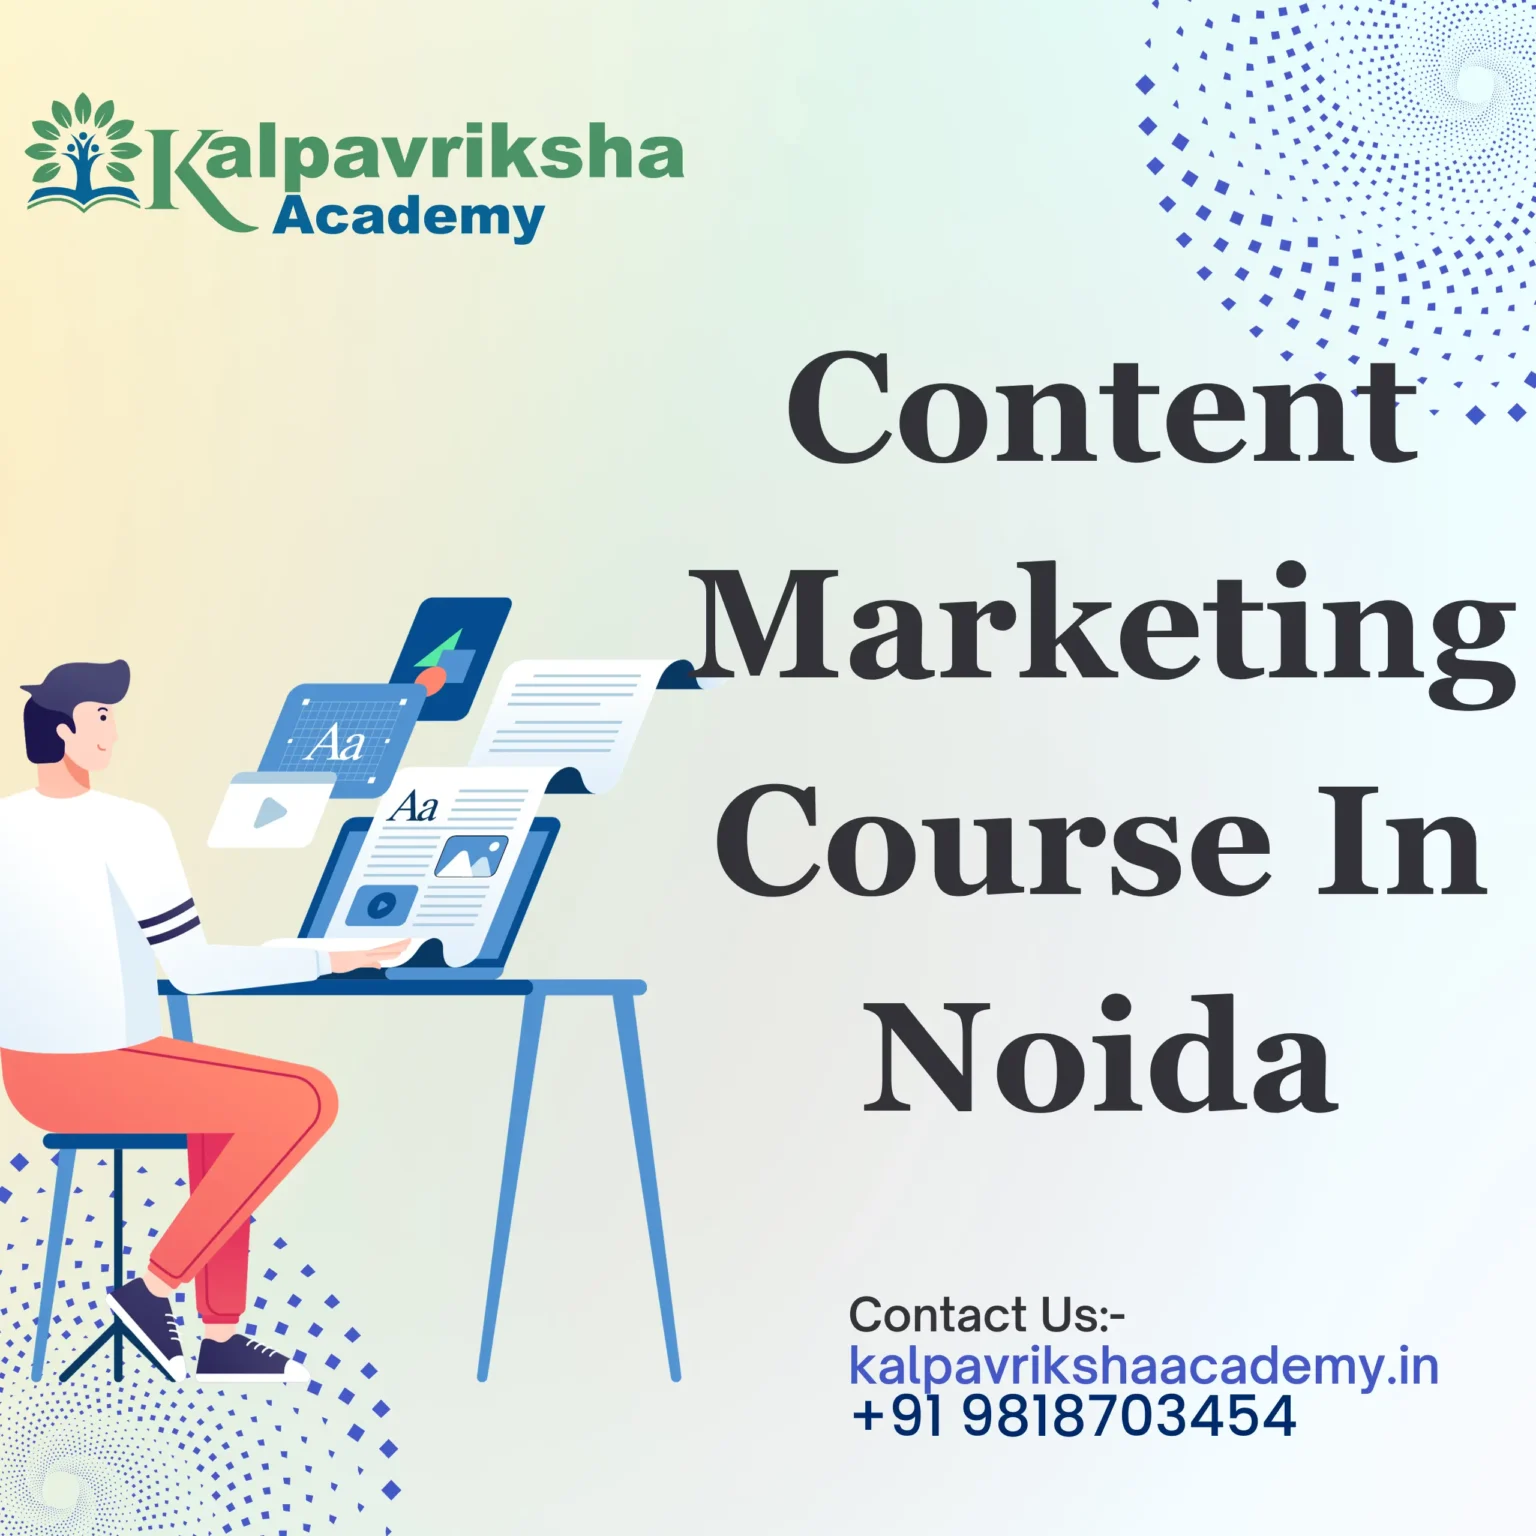 Content Marketing Course in Noida - Kalpavriksha Academy